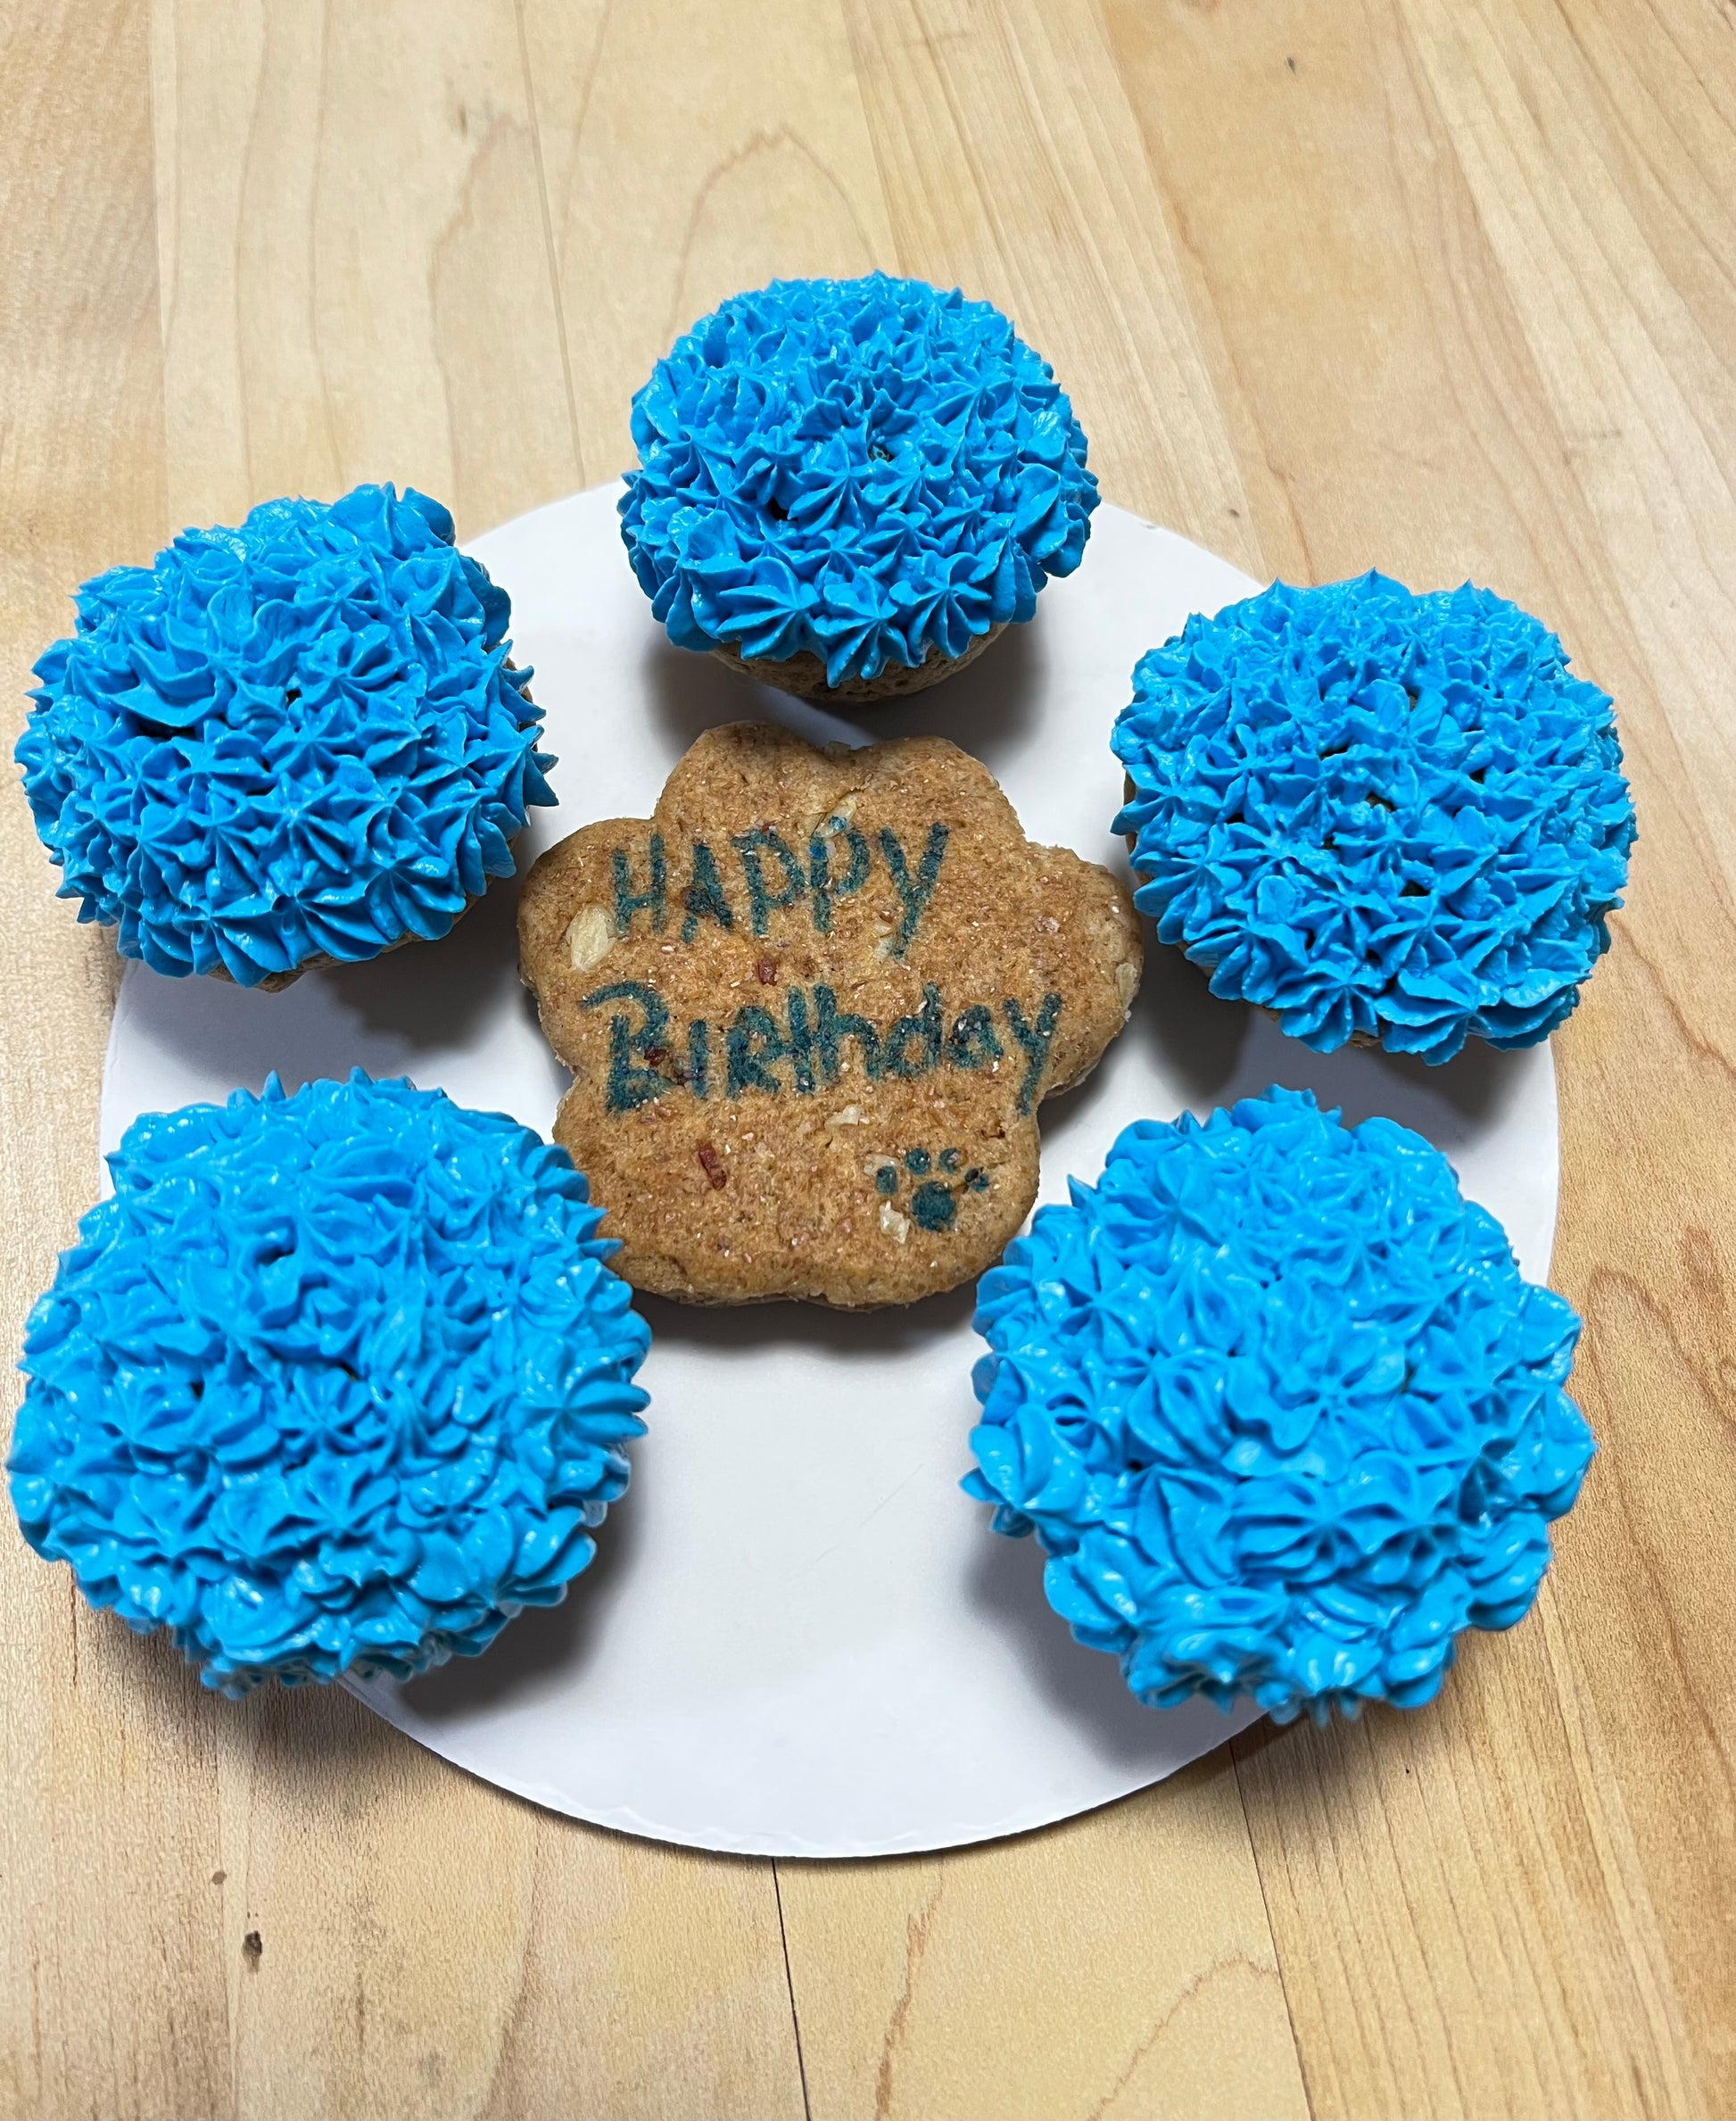 Birthday cupcakes & bacos treat.